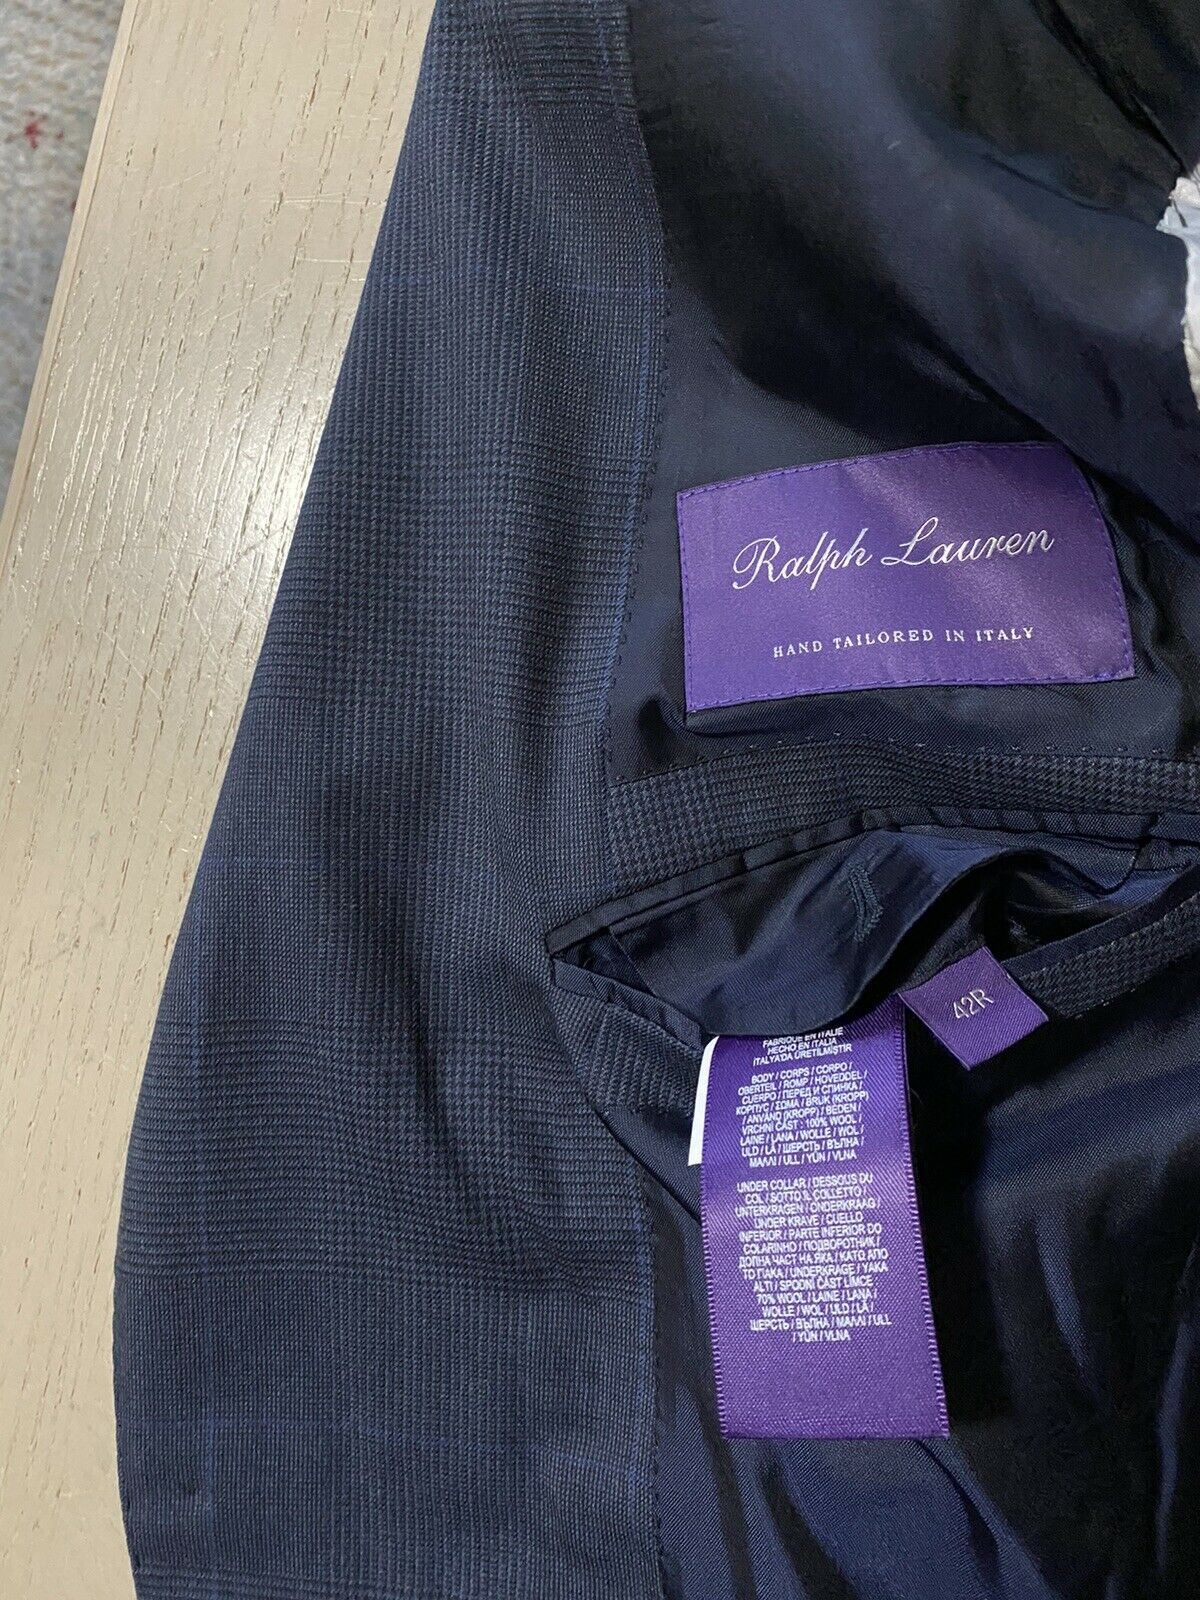 Neu $3295 Ralph Lauren Purple Label Herrenanzug Marineblau 42R US/52R Eu Italien